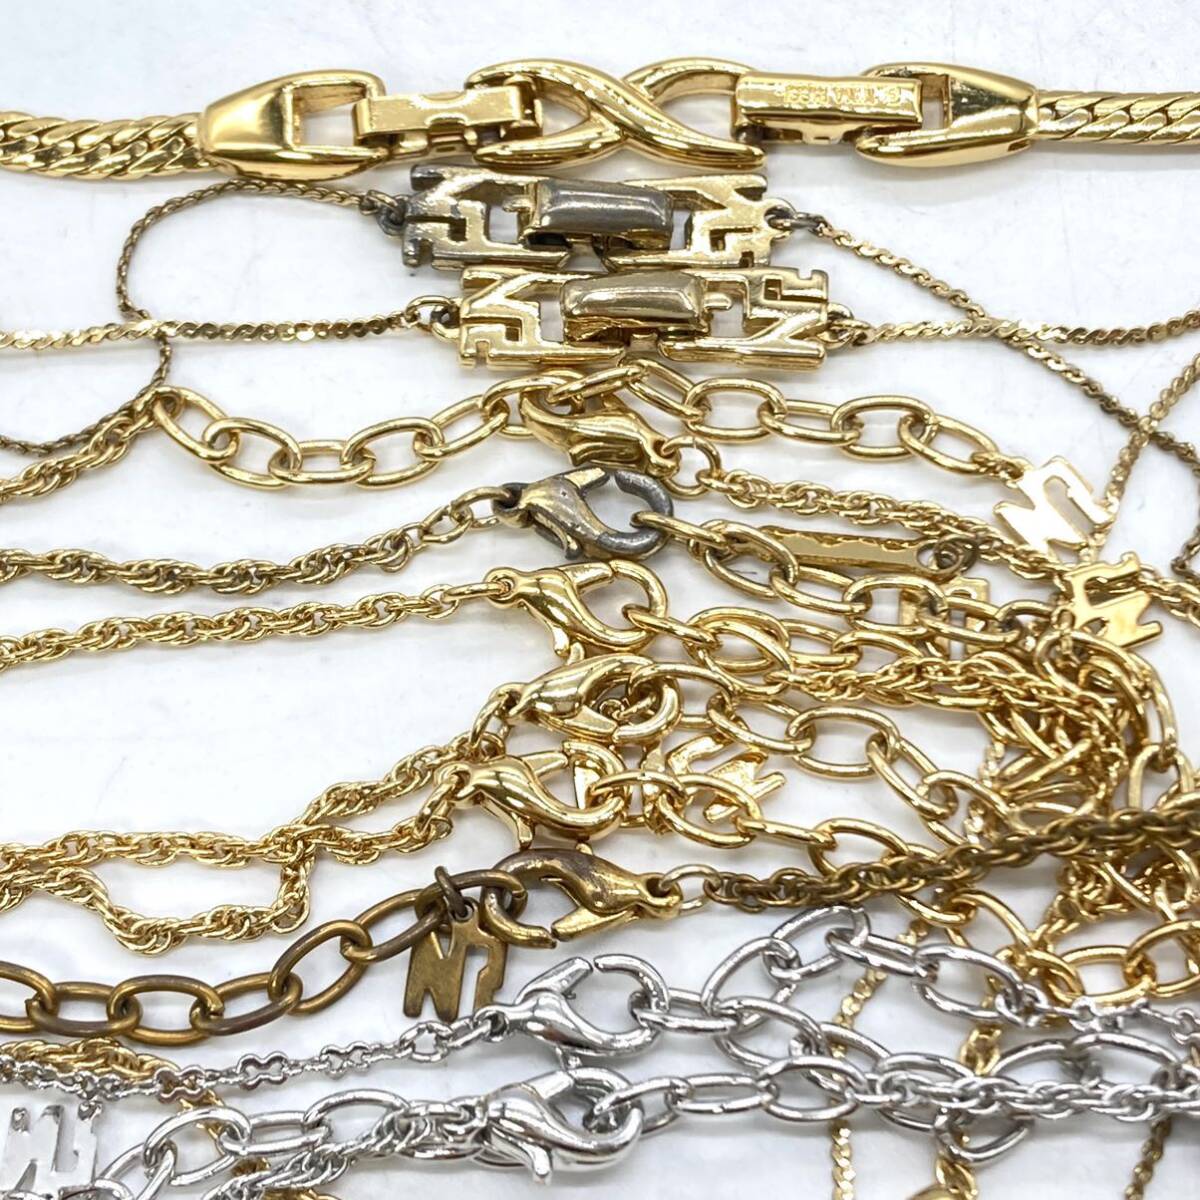 ■NINA RICCI(ニナリッチ)アクセサリー21点おまとめ■a重量約125g earring pendant necklace accessory jewelry CE0_画像8